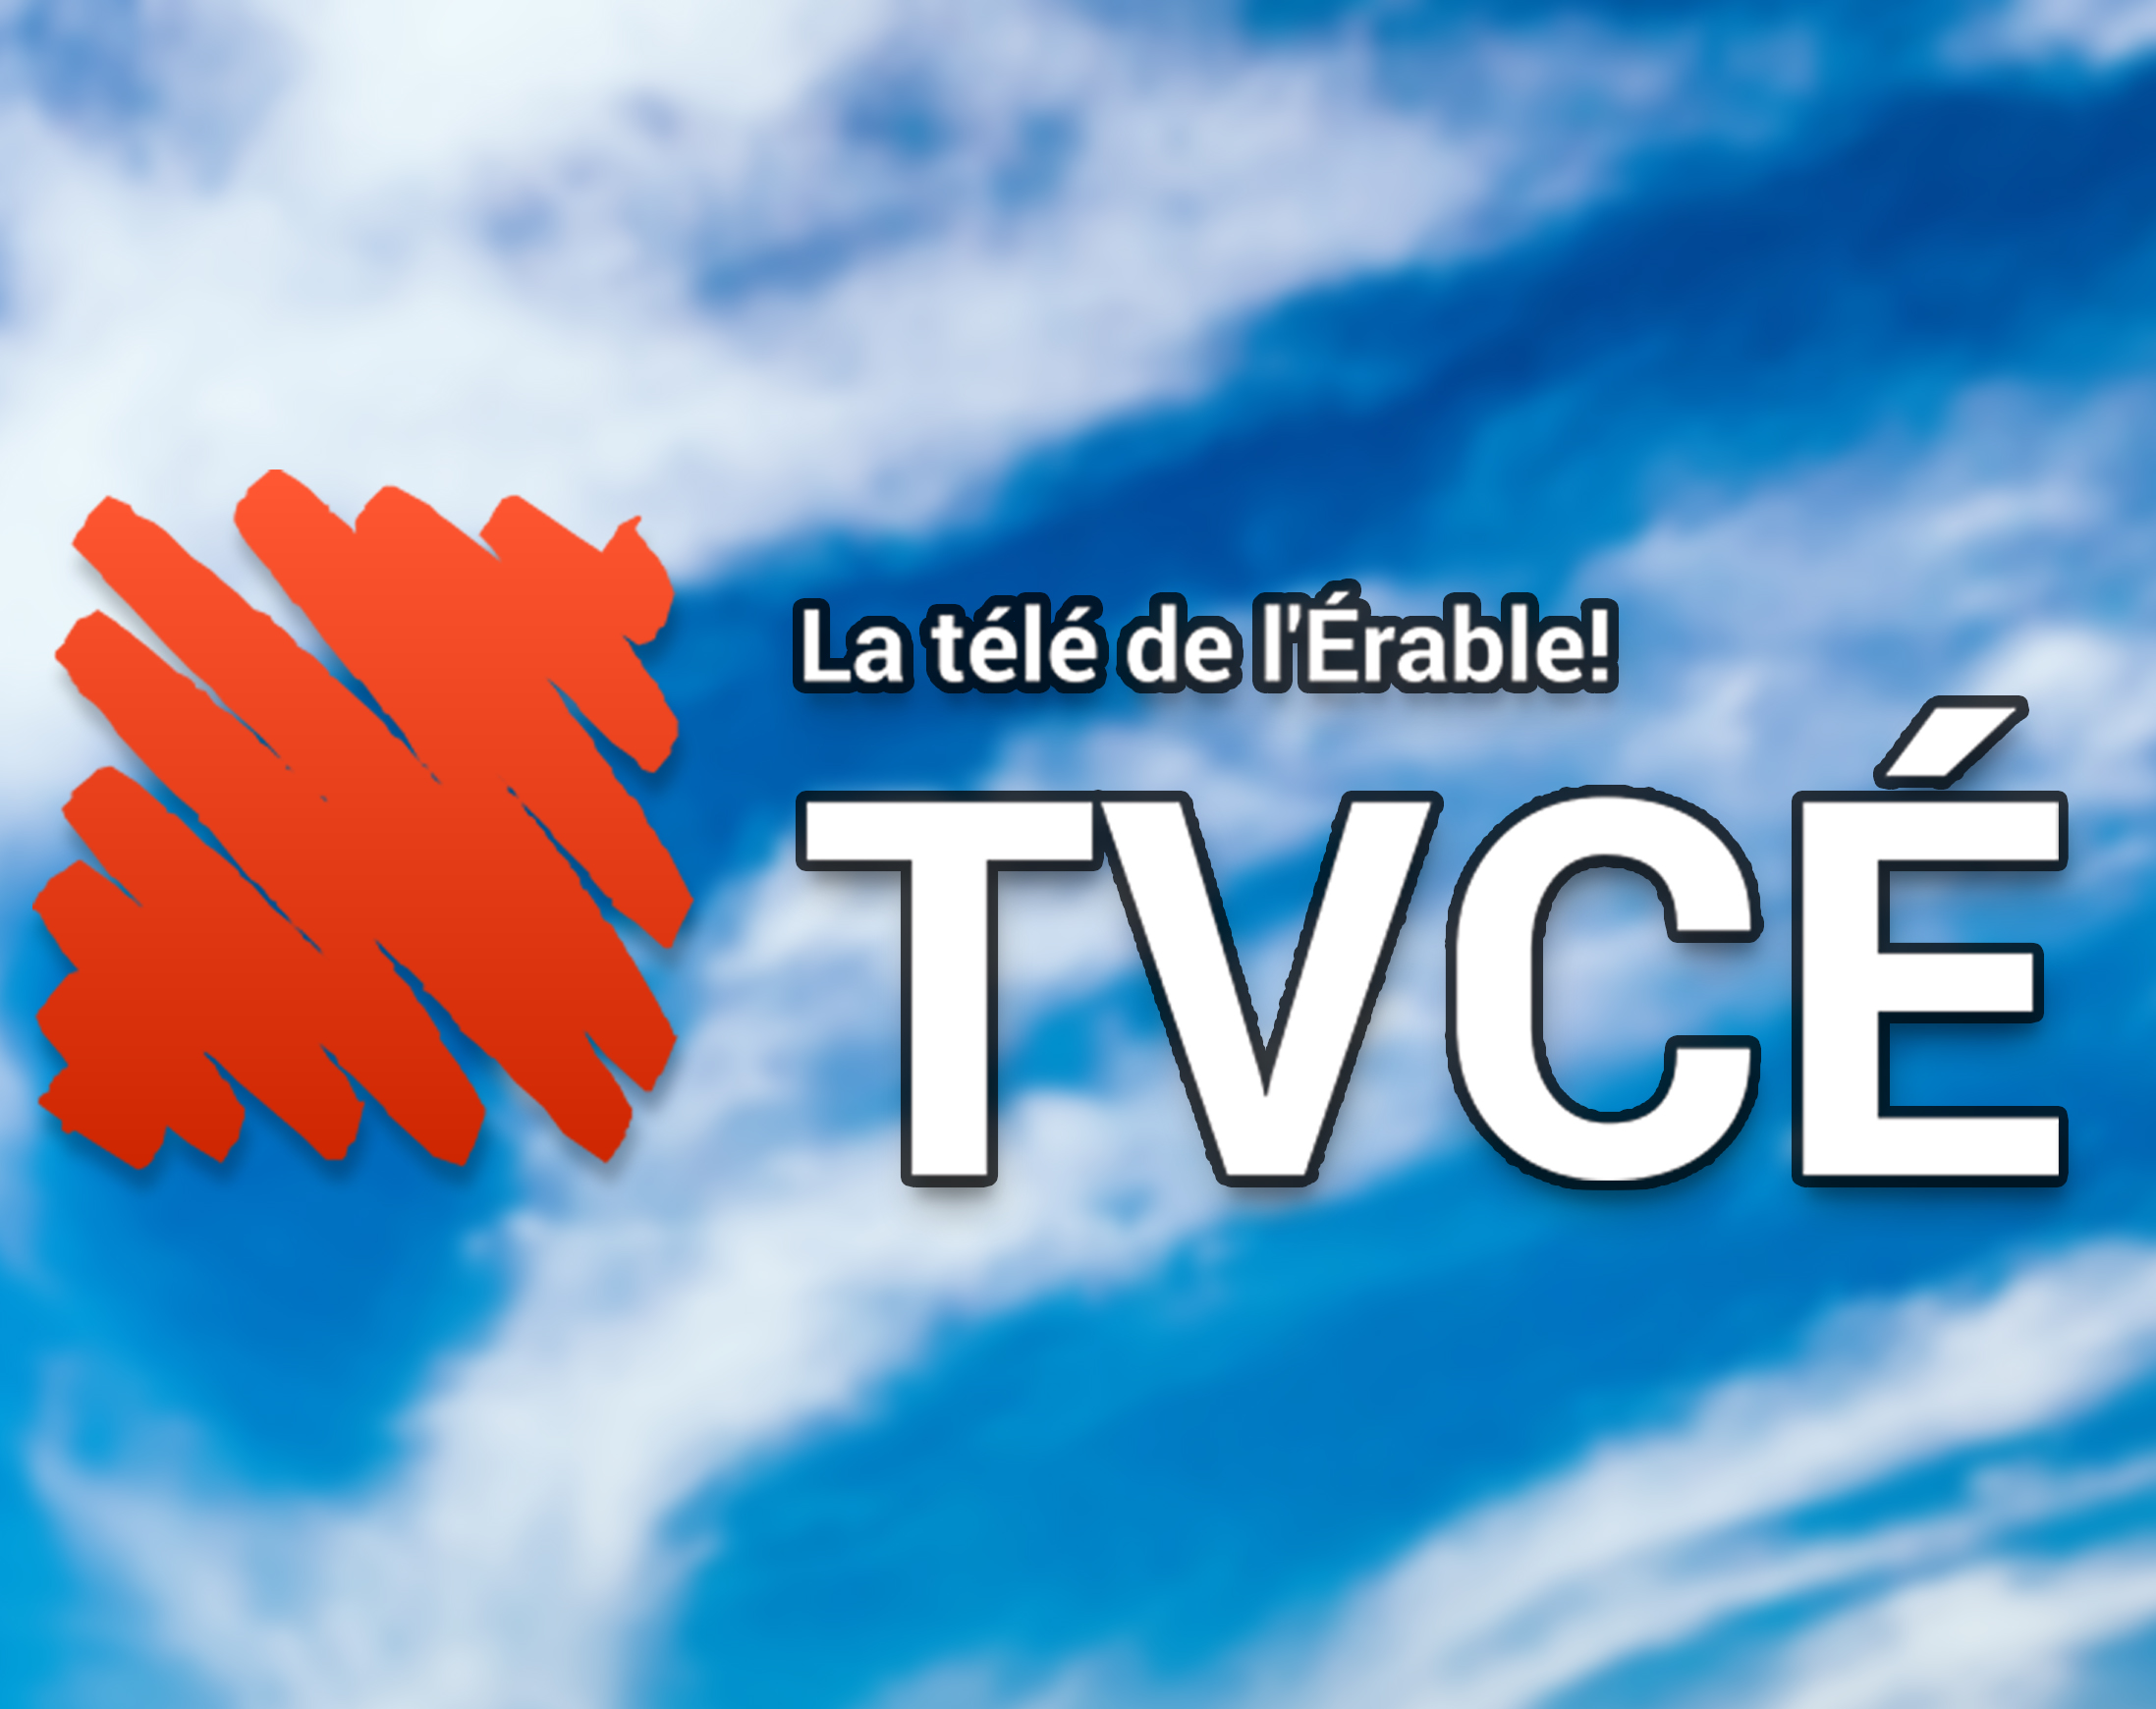 (c) Tvce.org